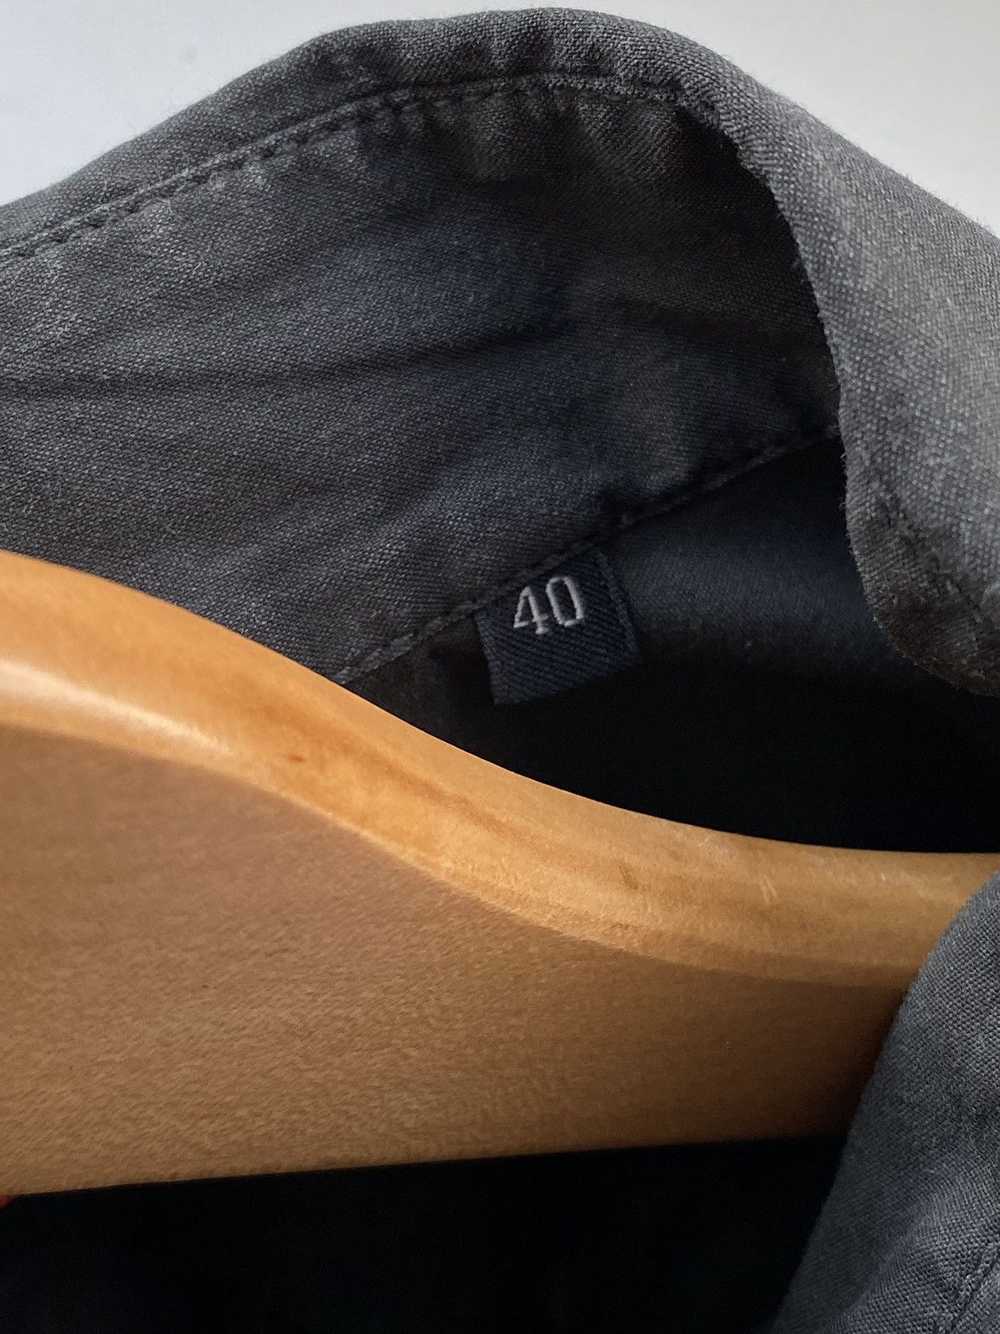 Prada Prada Button Up Shirt Black Tab Luxury Stre… - image 6